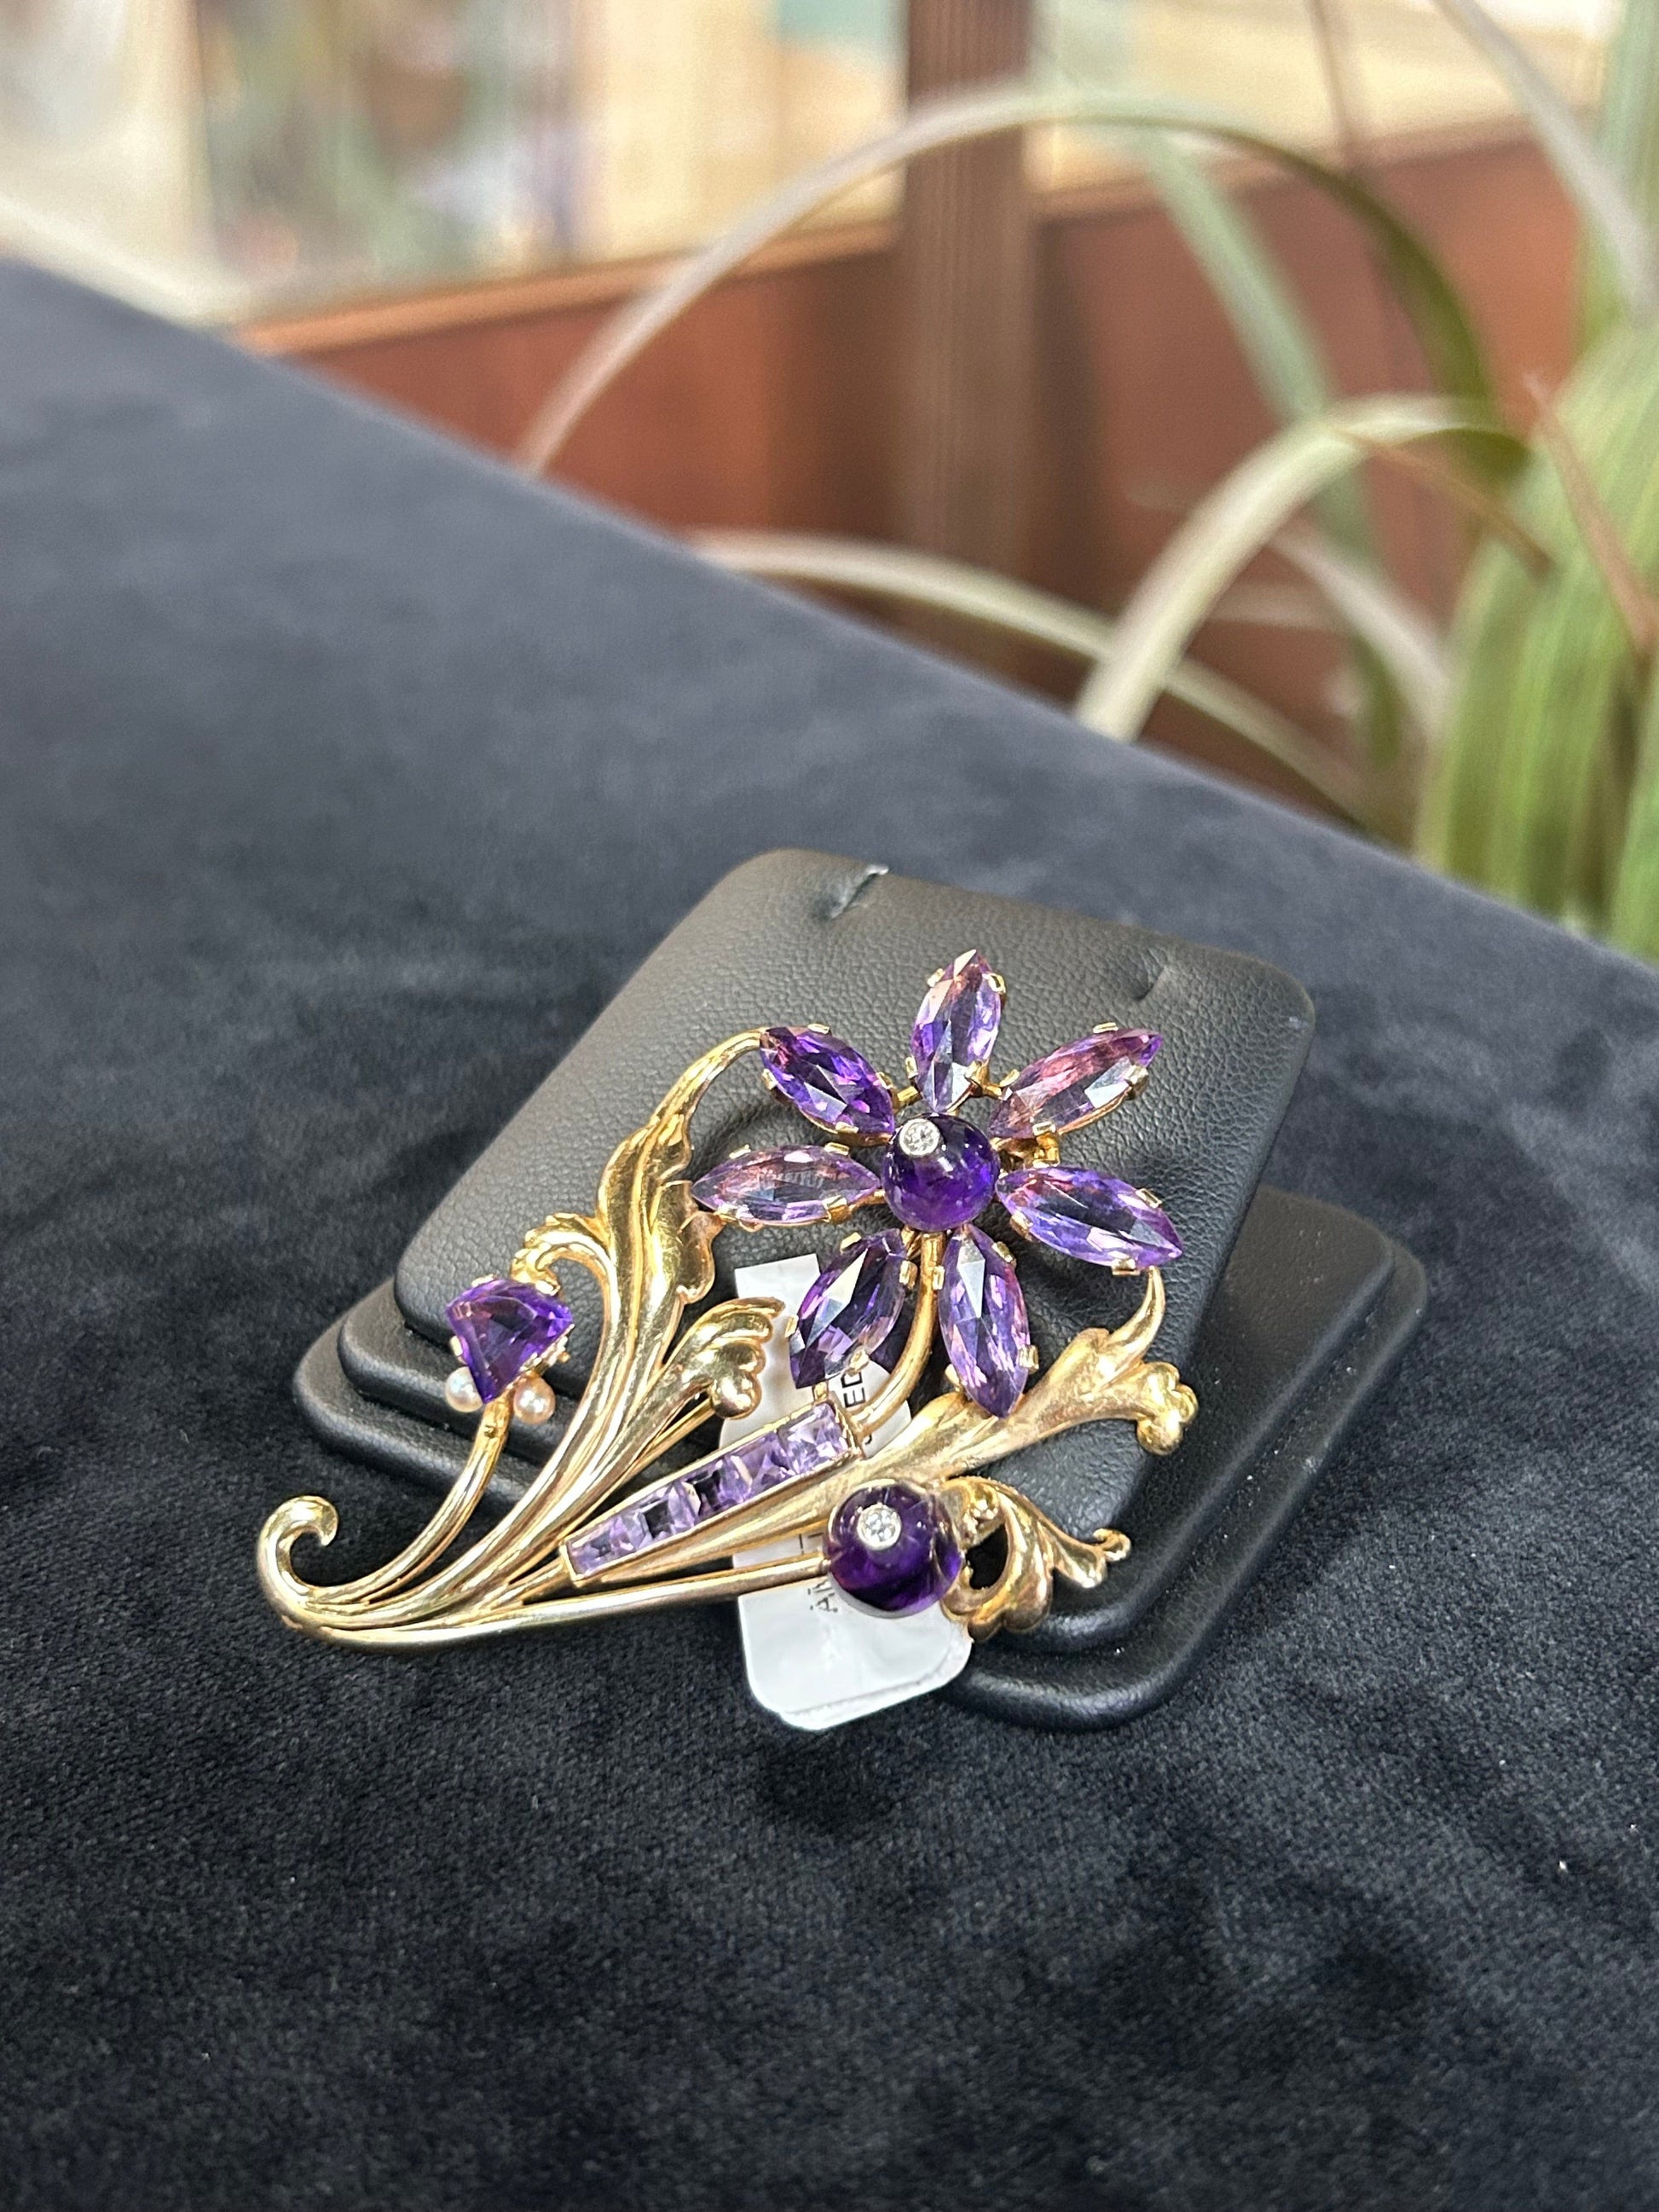 a purple flower brooch sitting on top of a black cushion